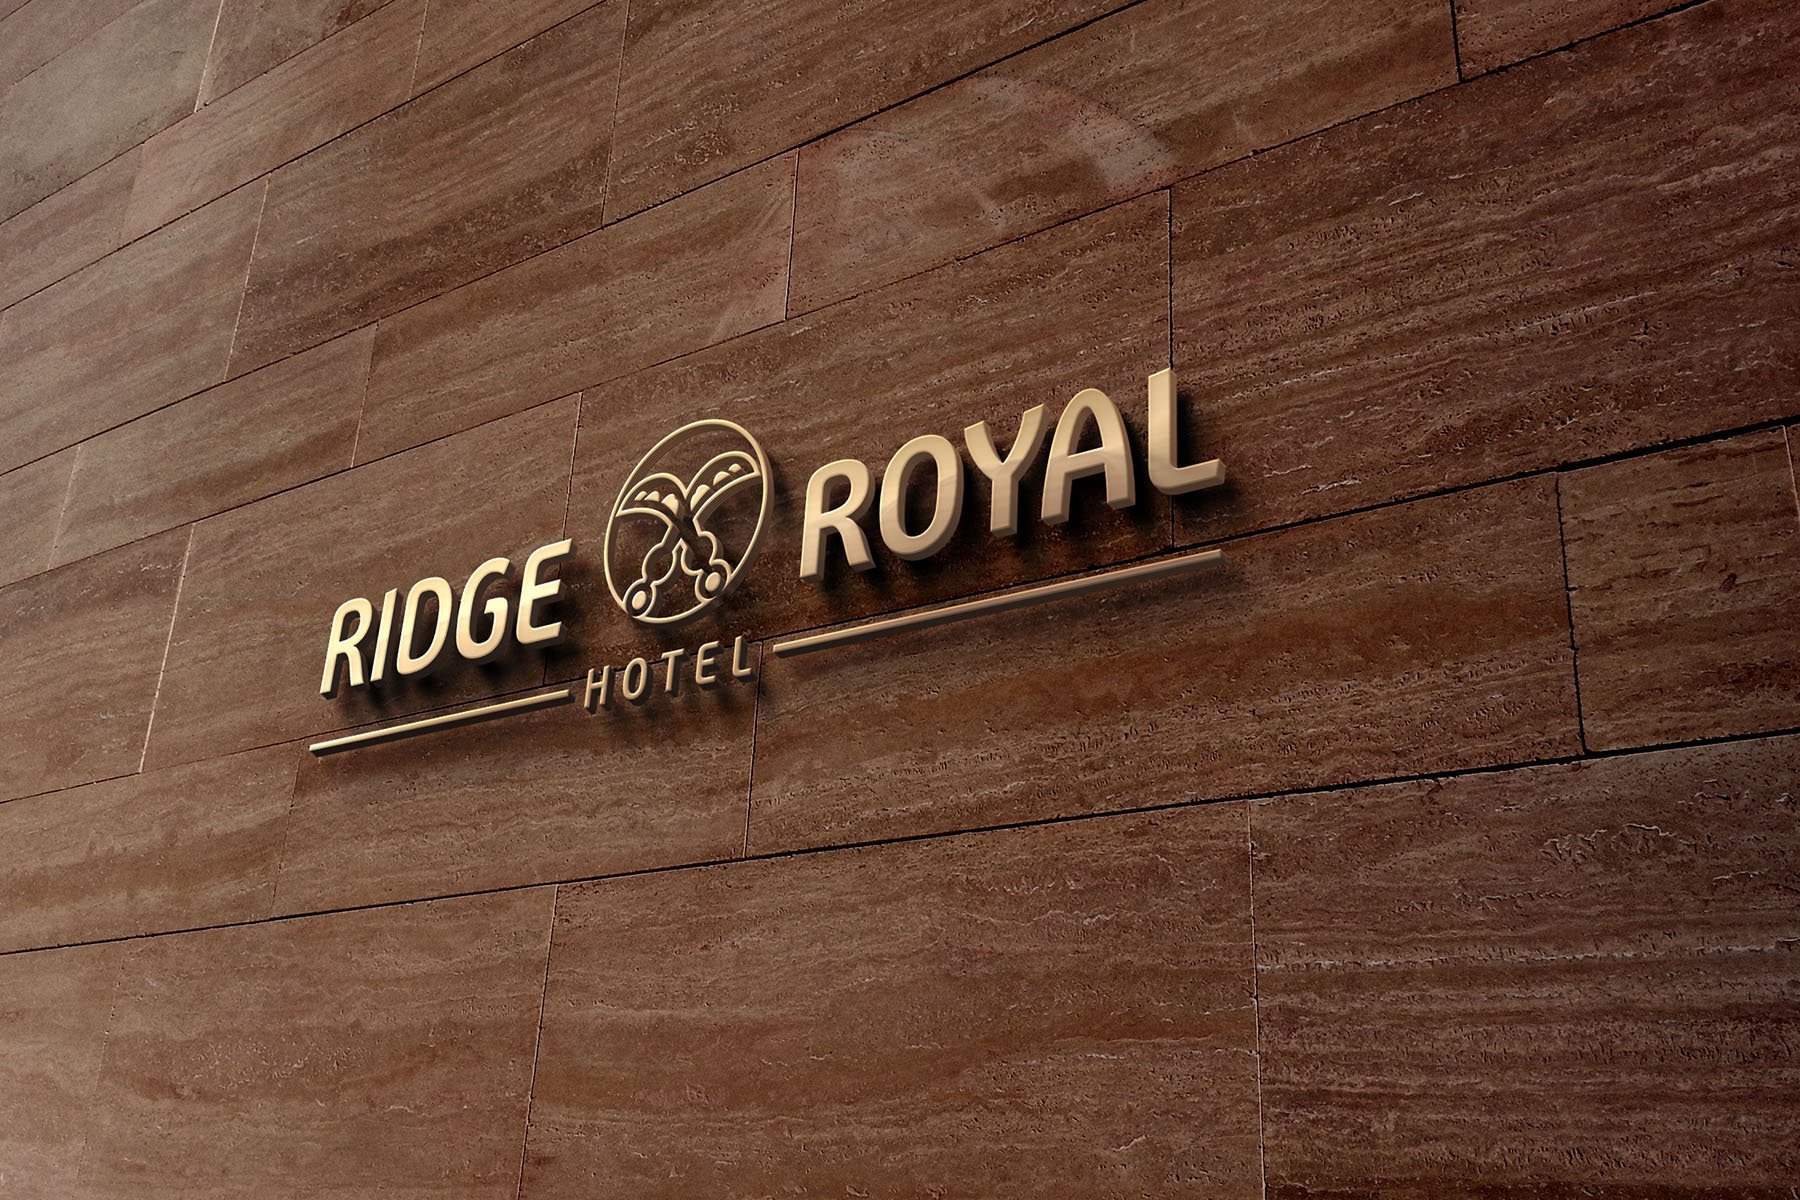 Ridge Royal Hotel